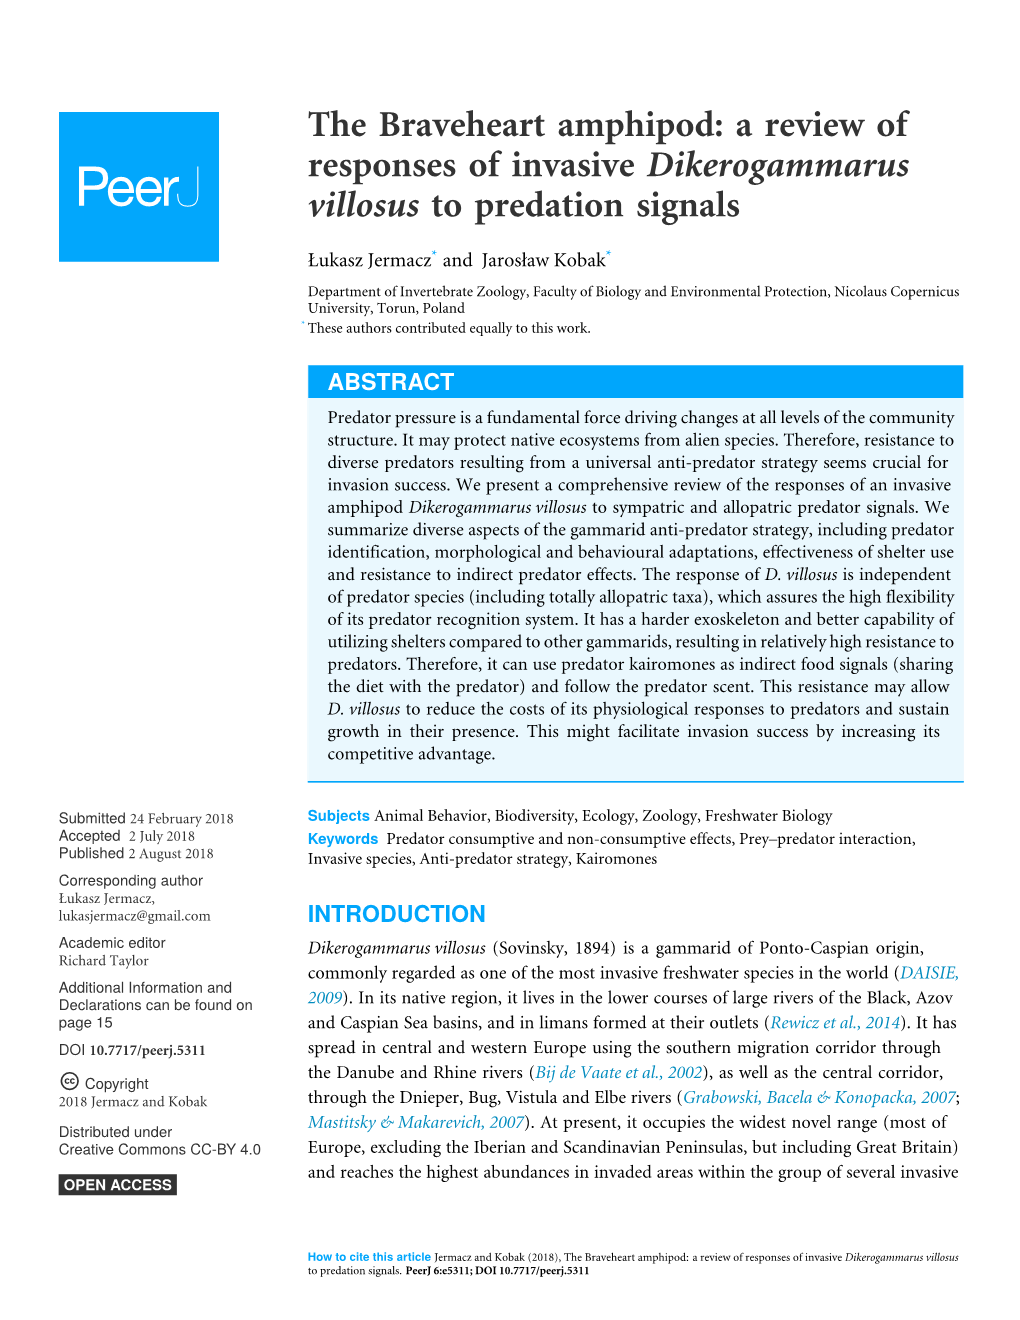 A Review of Responses of Invasive Dikerogammarus Villosus to Predation Signals